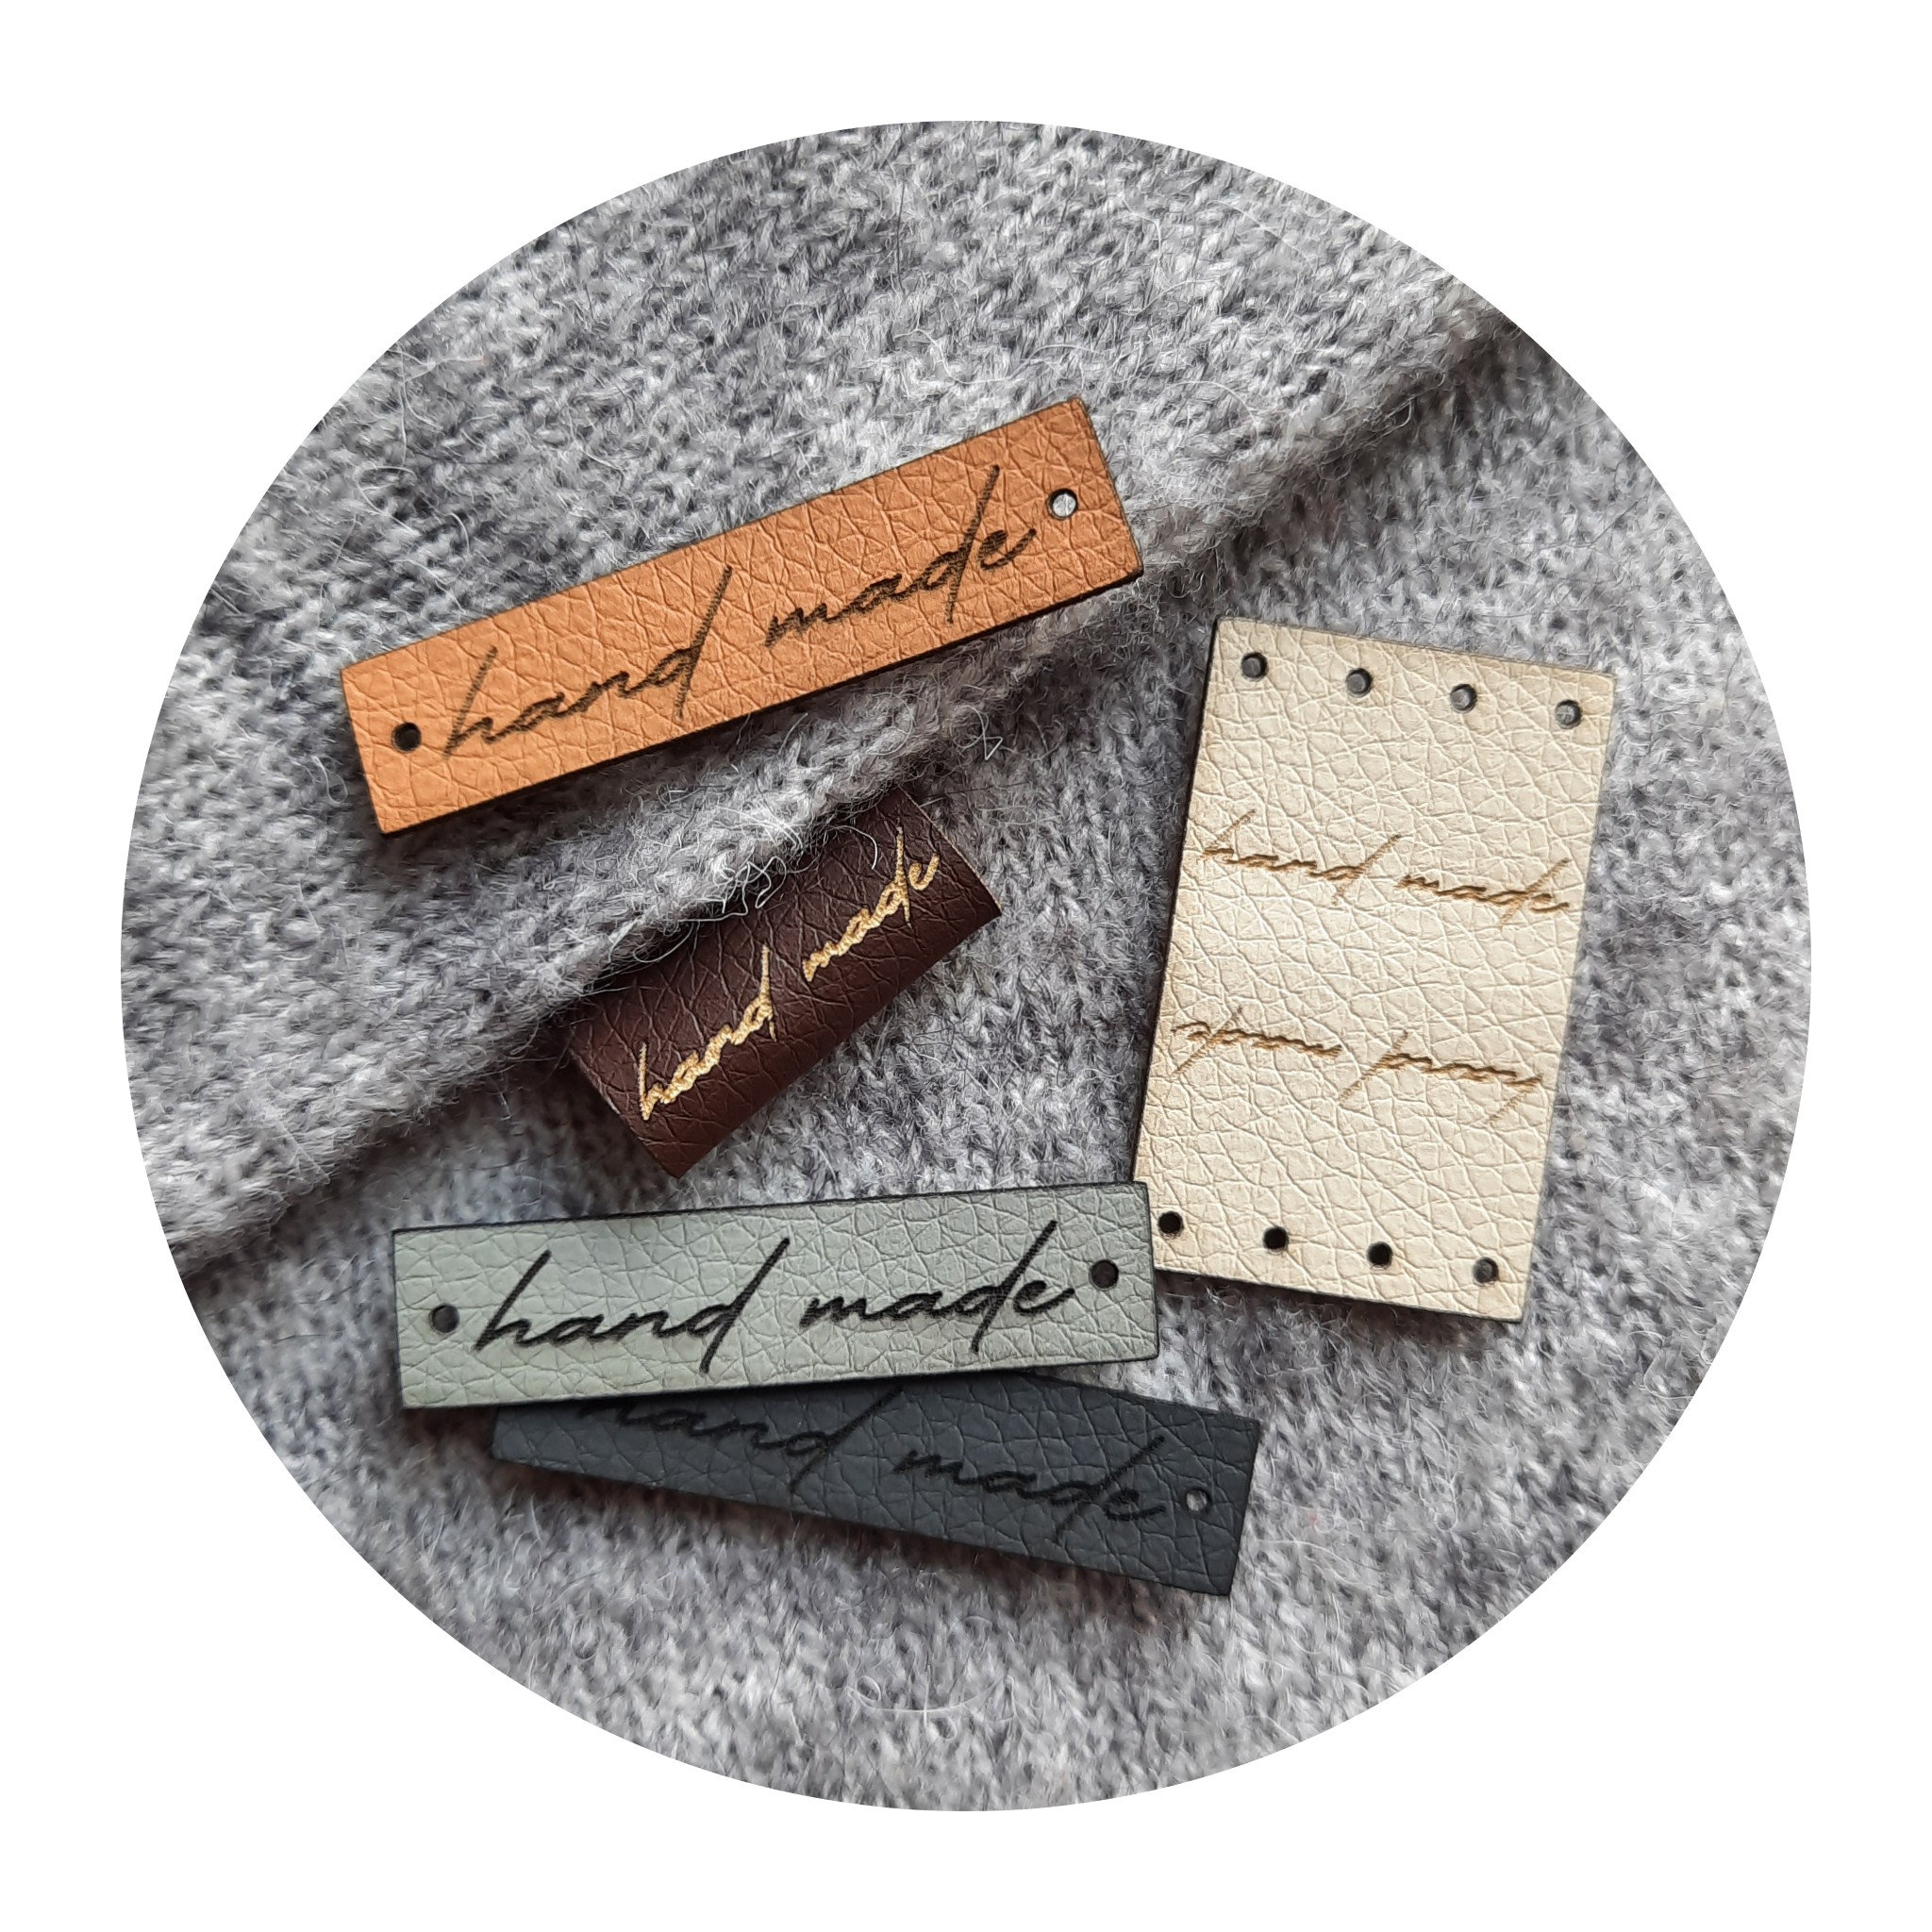  LIGHTAOTAO 100pcs Handmade Label Leather Tags for Handmade  Items Button Tags Sewing Labels for Handmade Items sew on tag Clothing tag  Personalized Tags for Handmade Items Jeans Quilting pu : אמנות